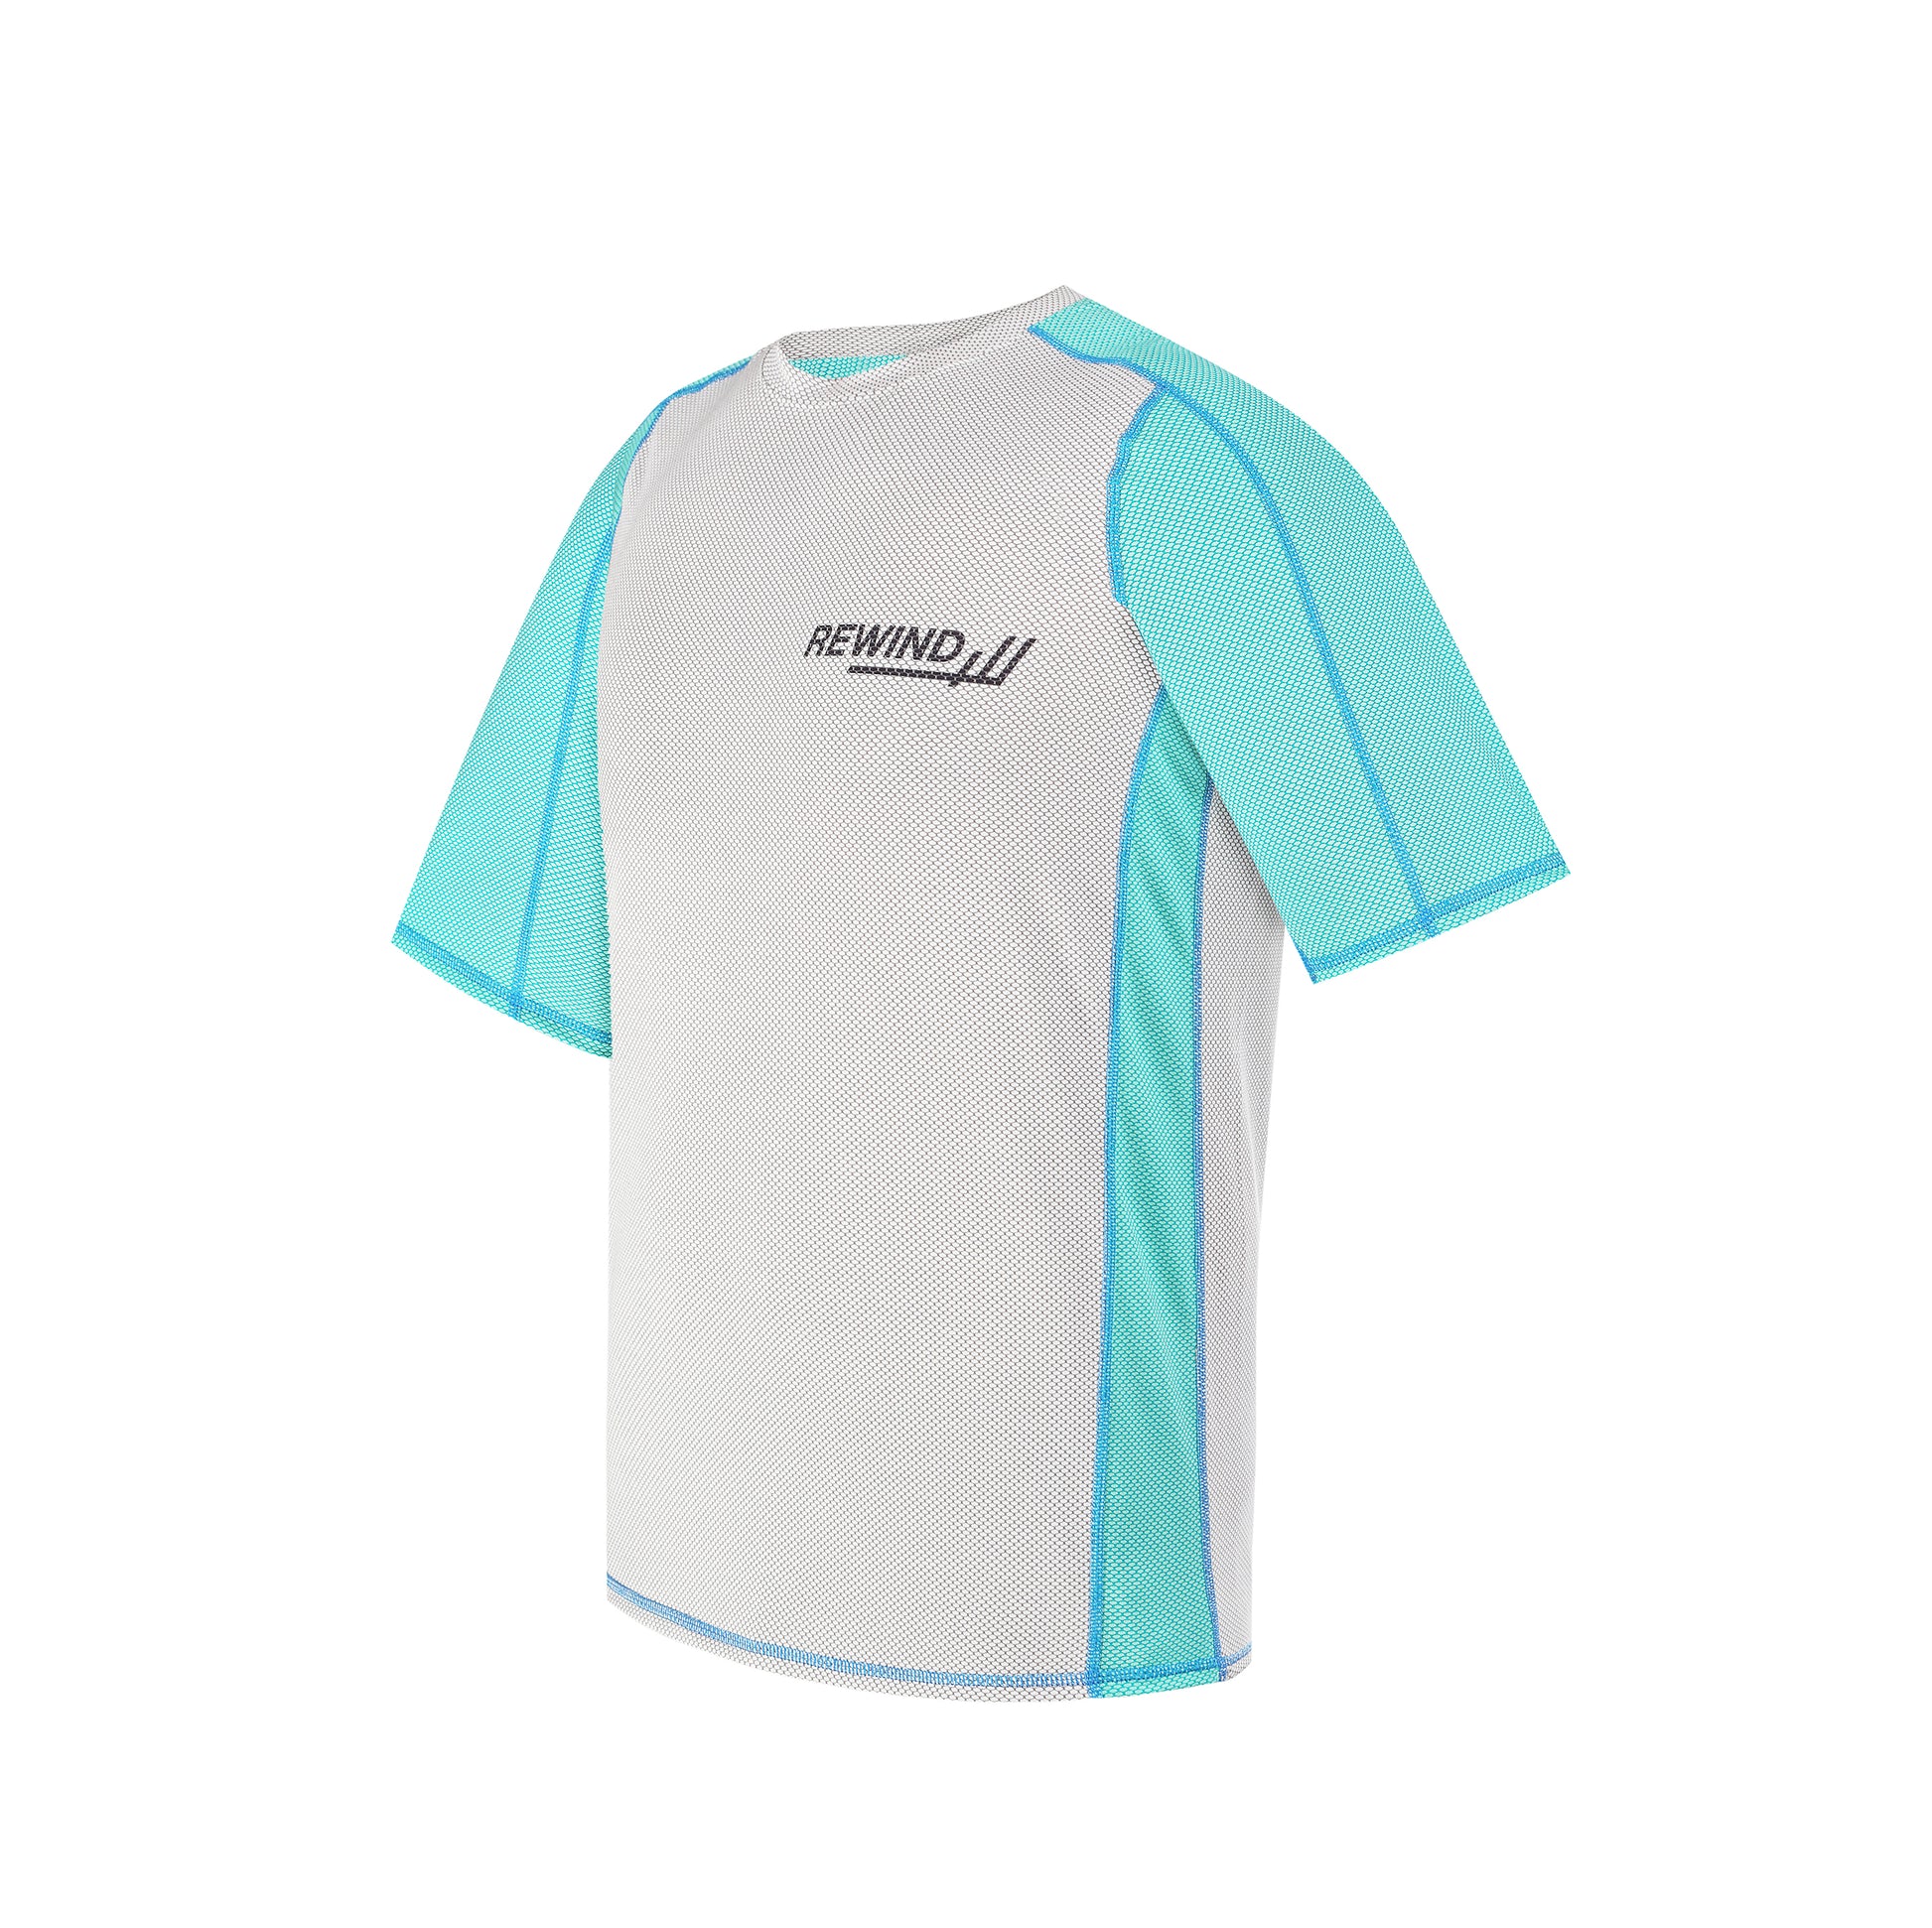 Designer cooling T-Shirt for tennis & sport for men from REwind, Ukraine